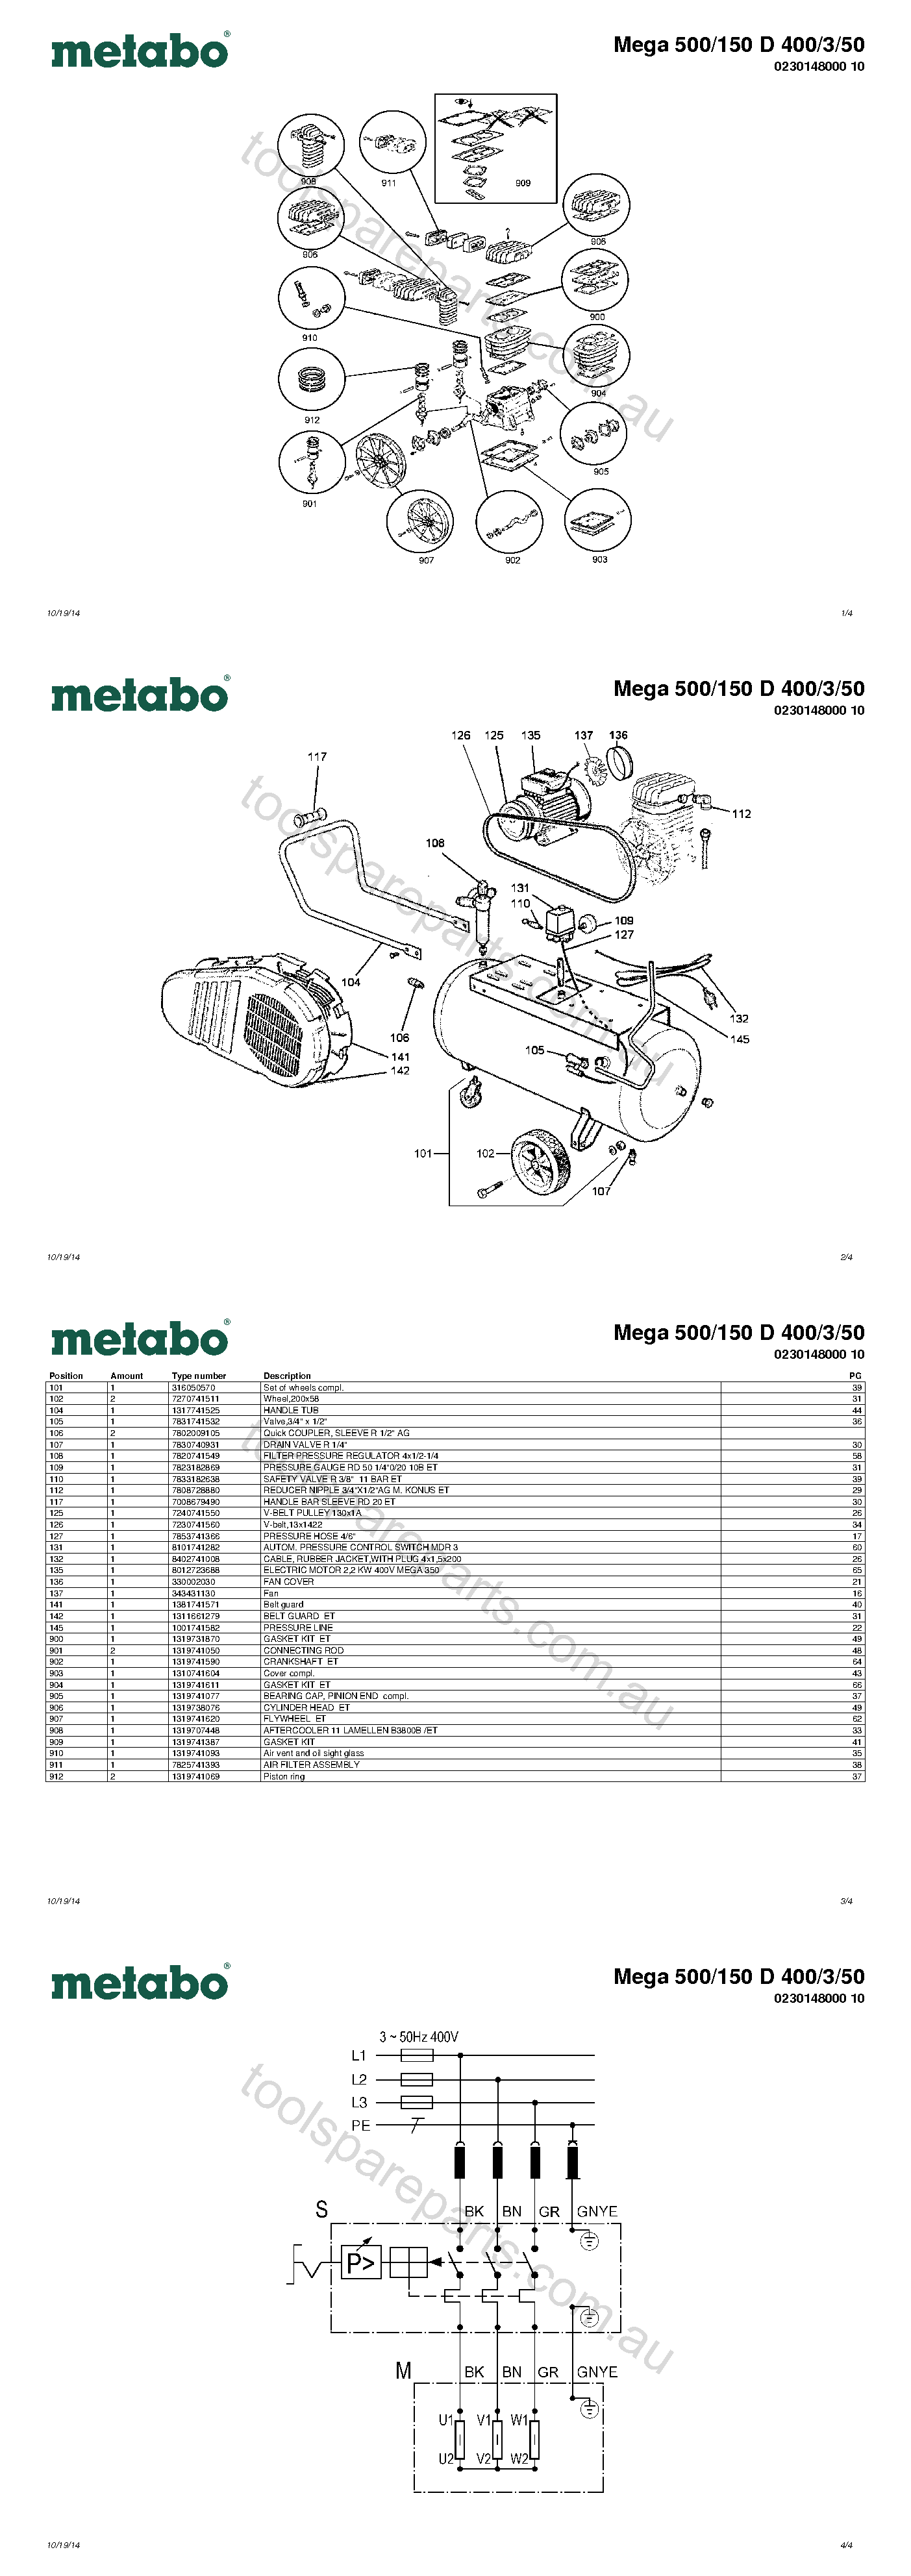 Metabo Mega 500/150 D 400/3/50 0230148000 10  Diagram 1